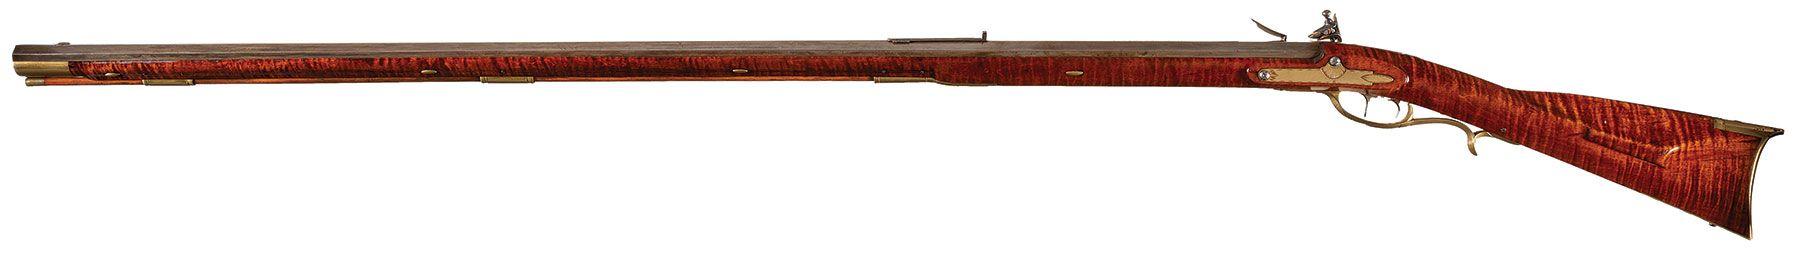 Documented Abias B. Smith Pennsylvania Long Rifle